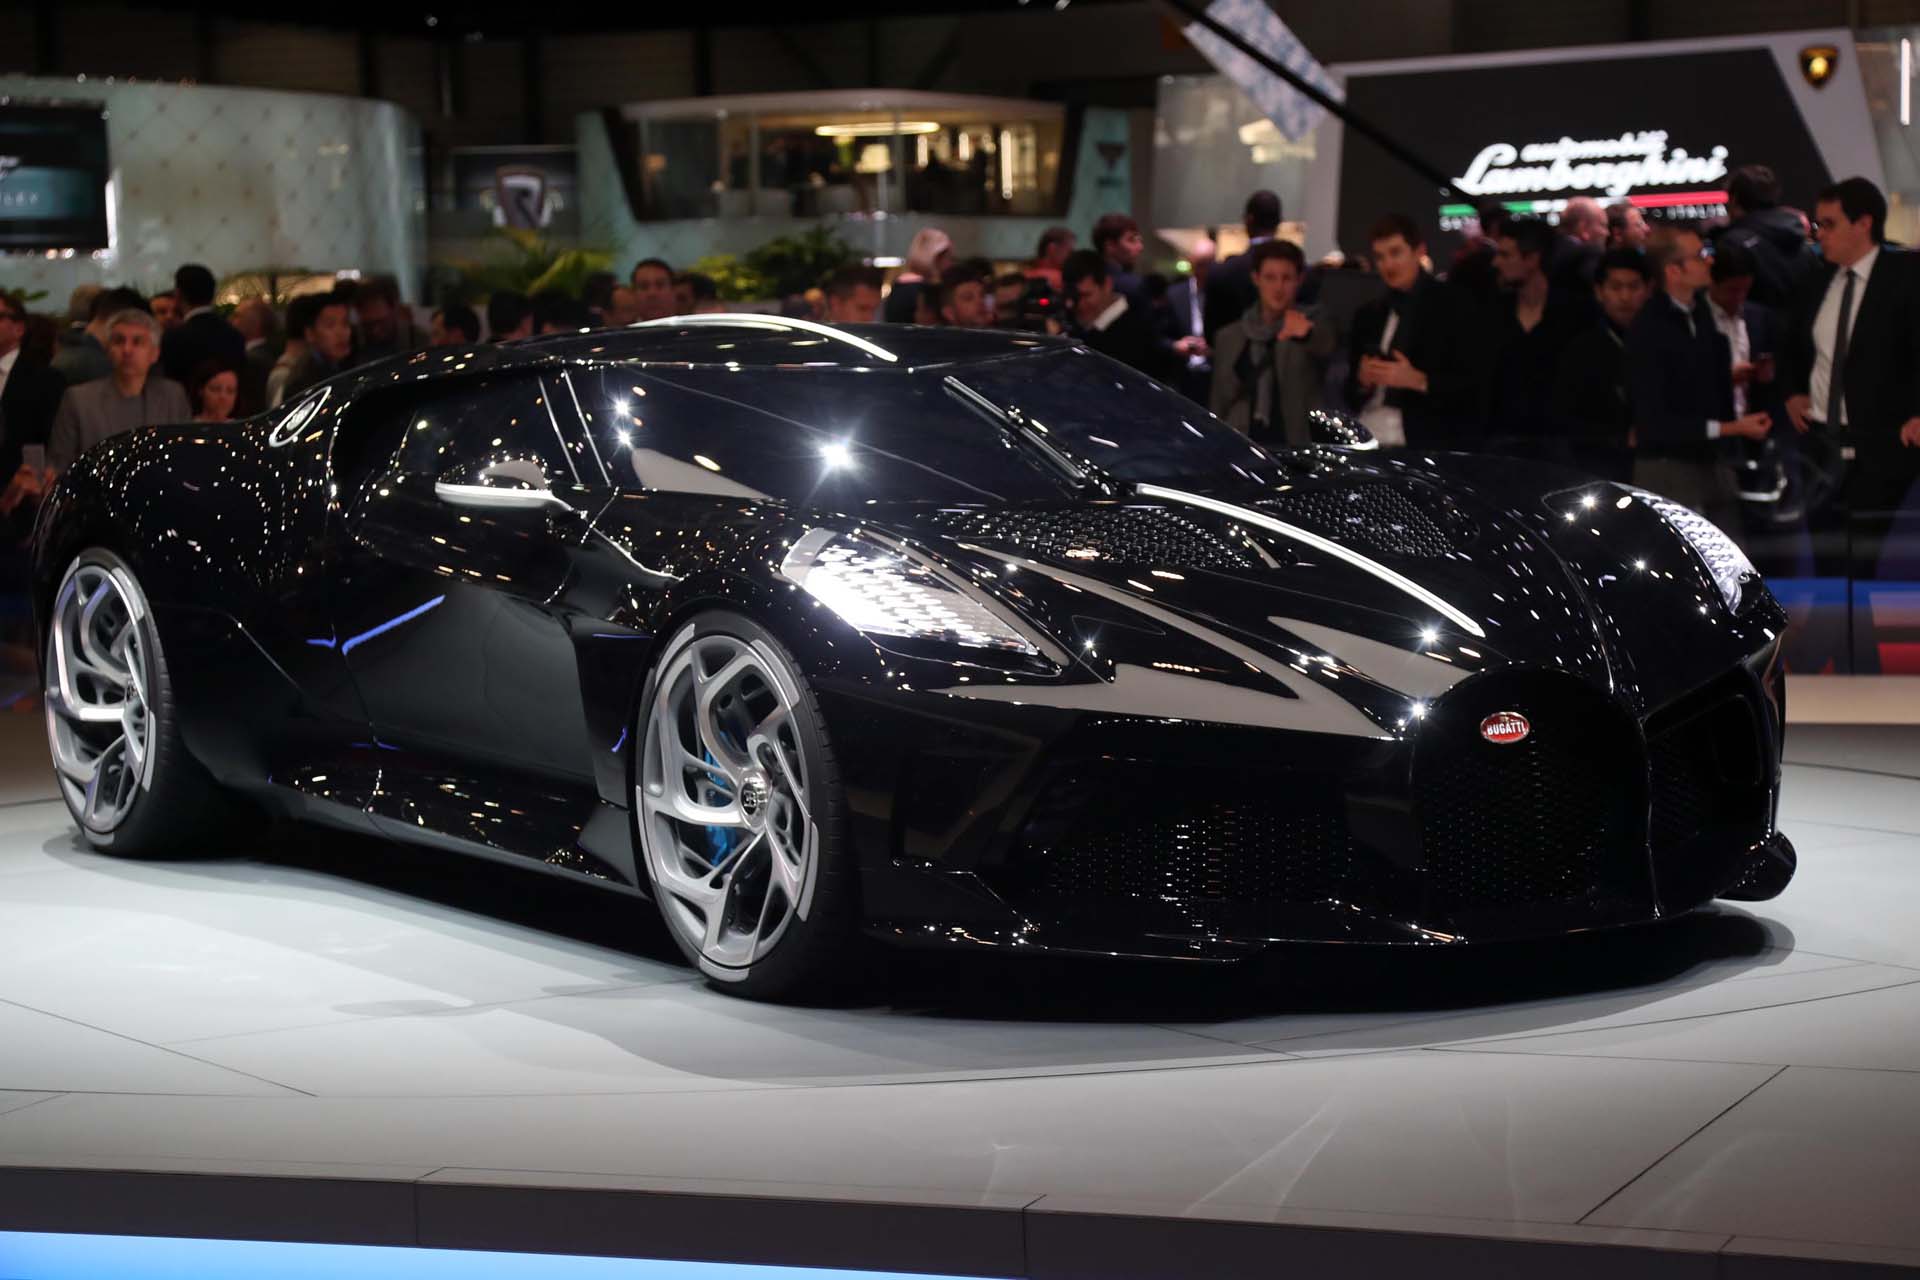 Cristiano Ronaldo Has Bought A $18 Million Bugatti Which Is The World's Most Expensive Car